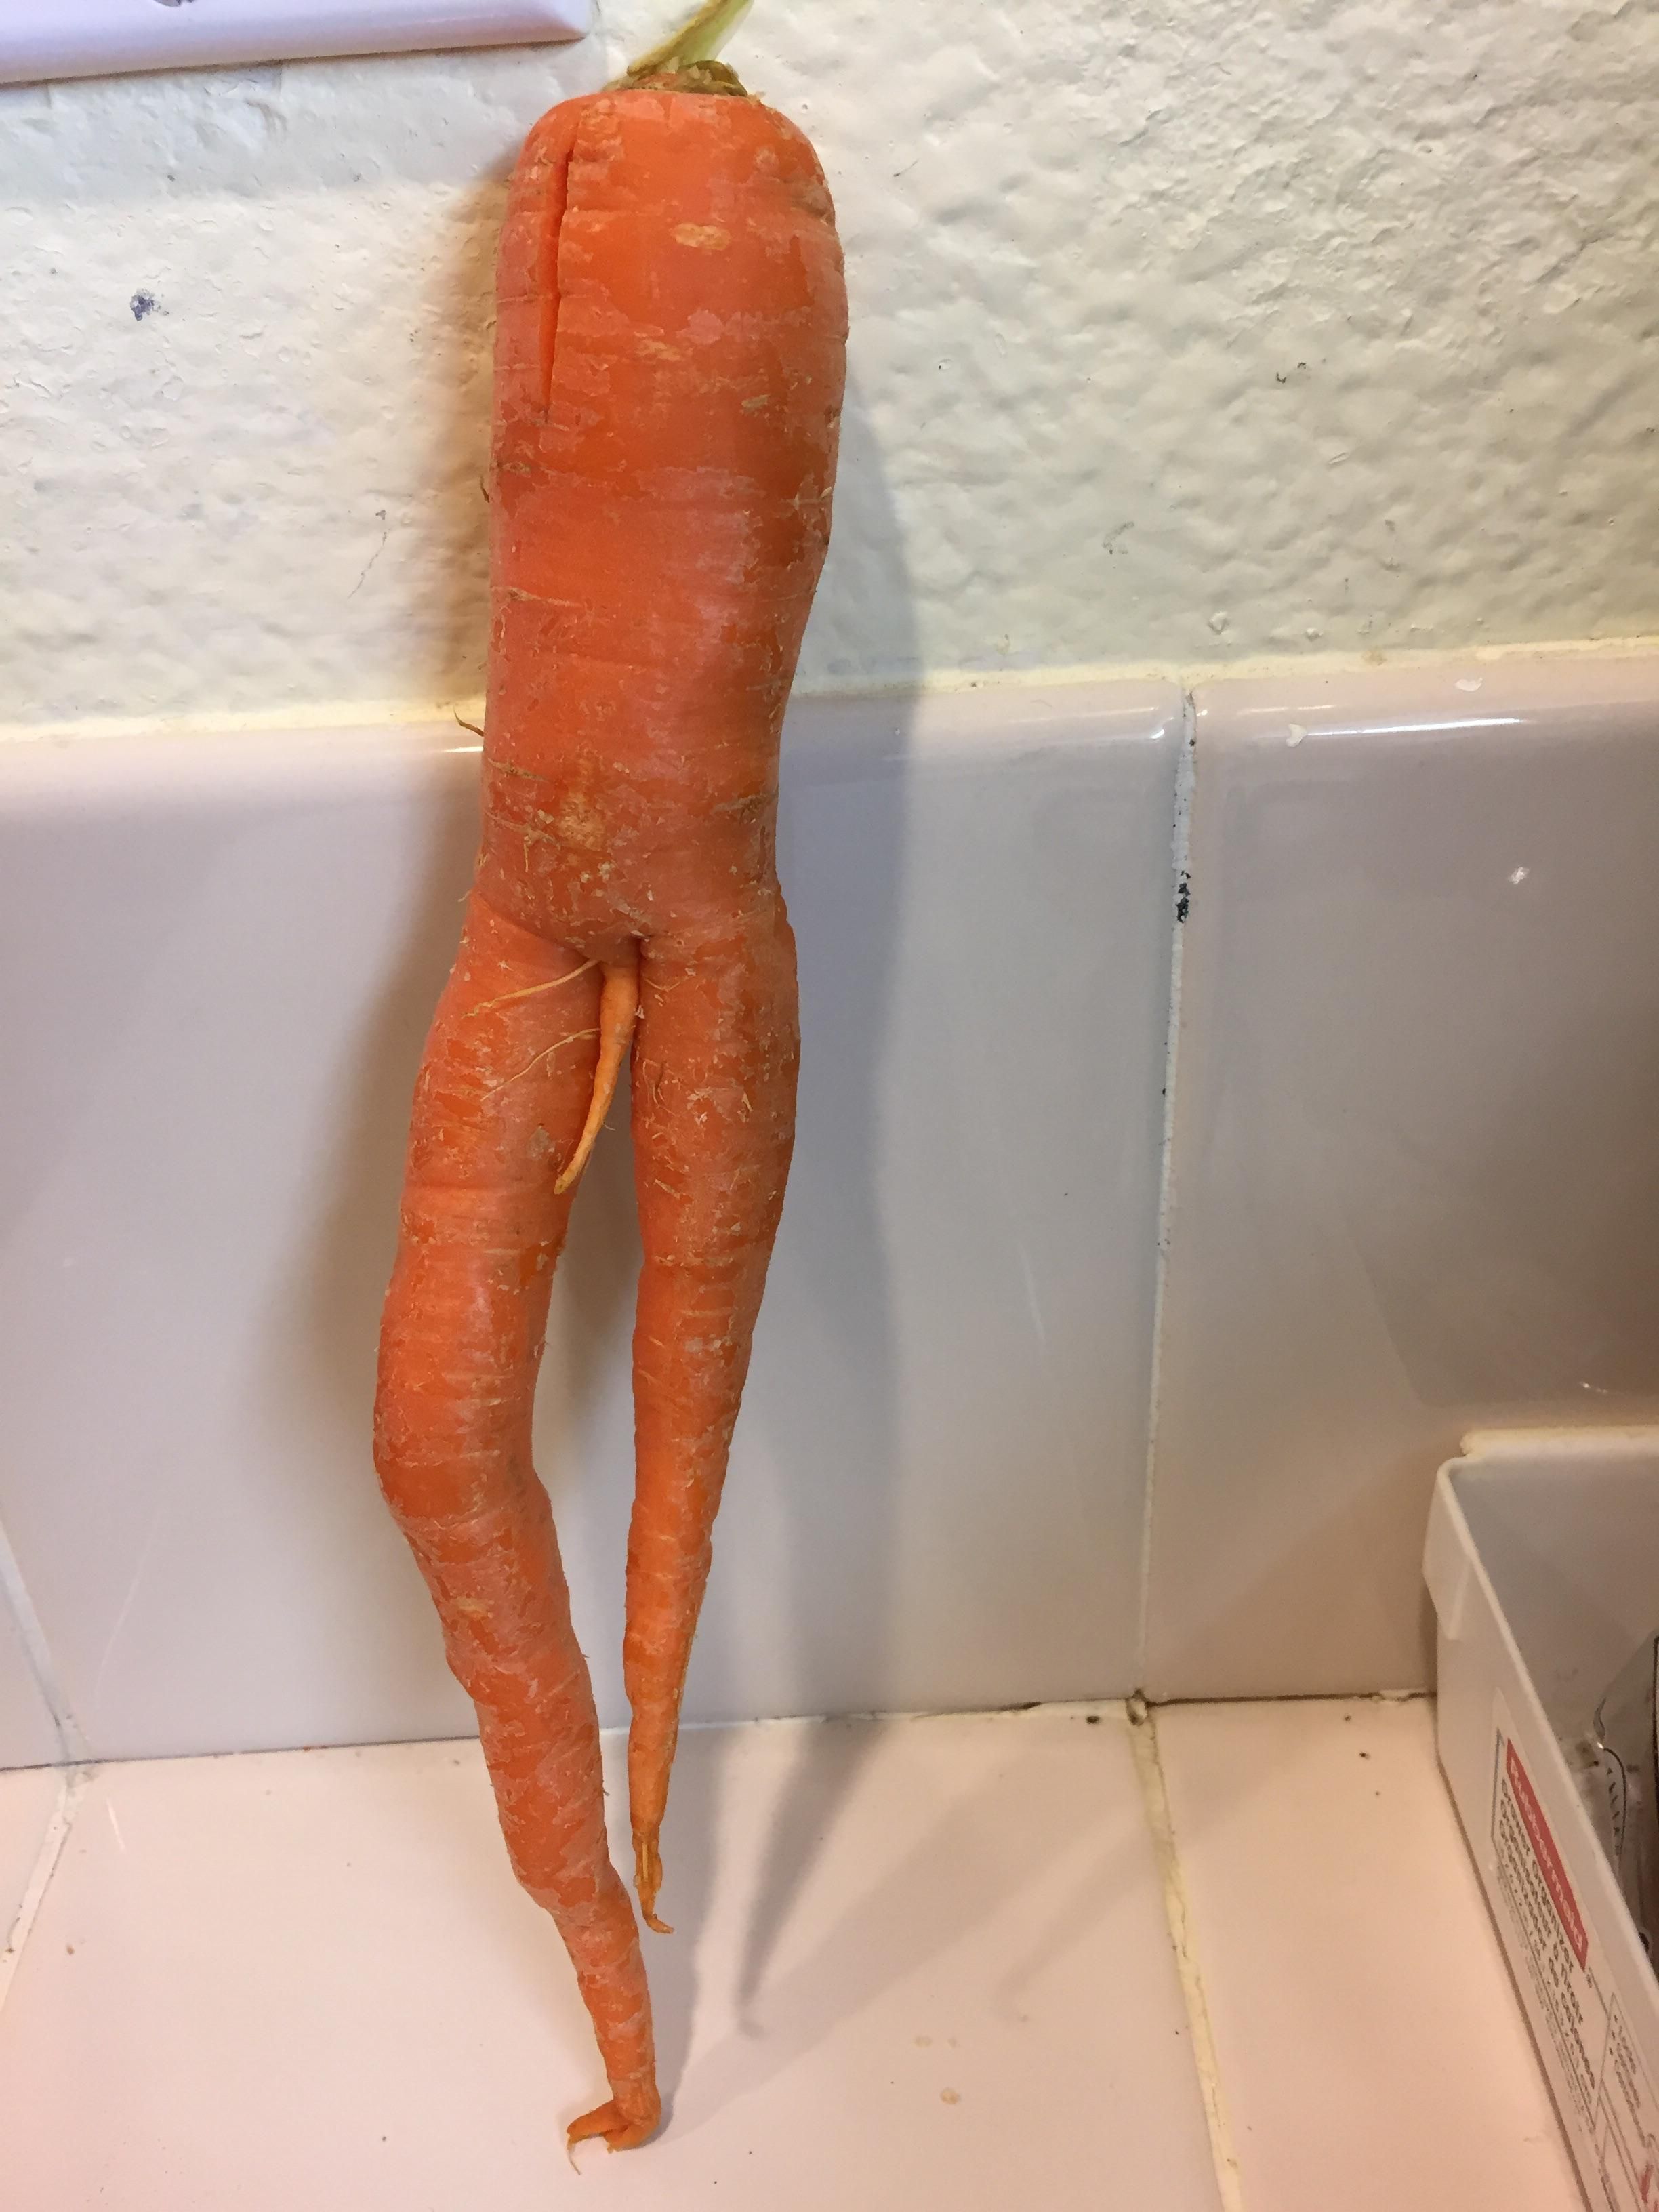 One unique carrot